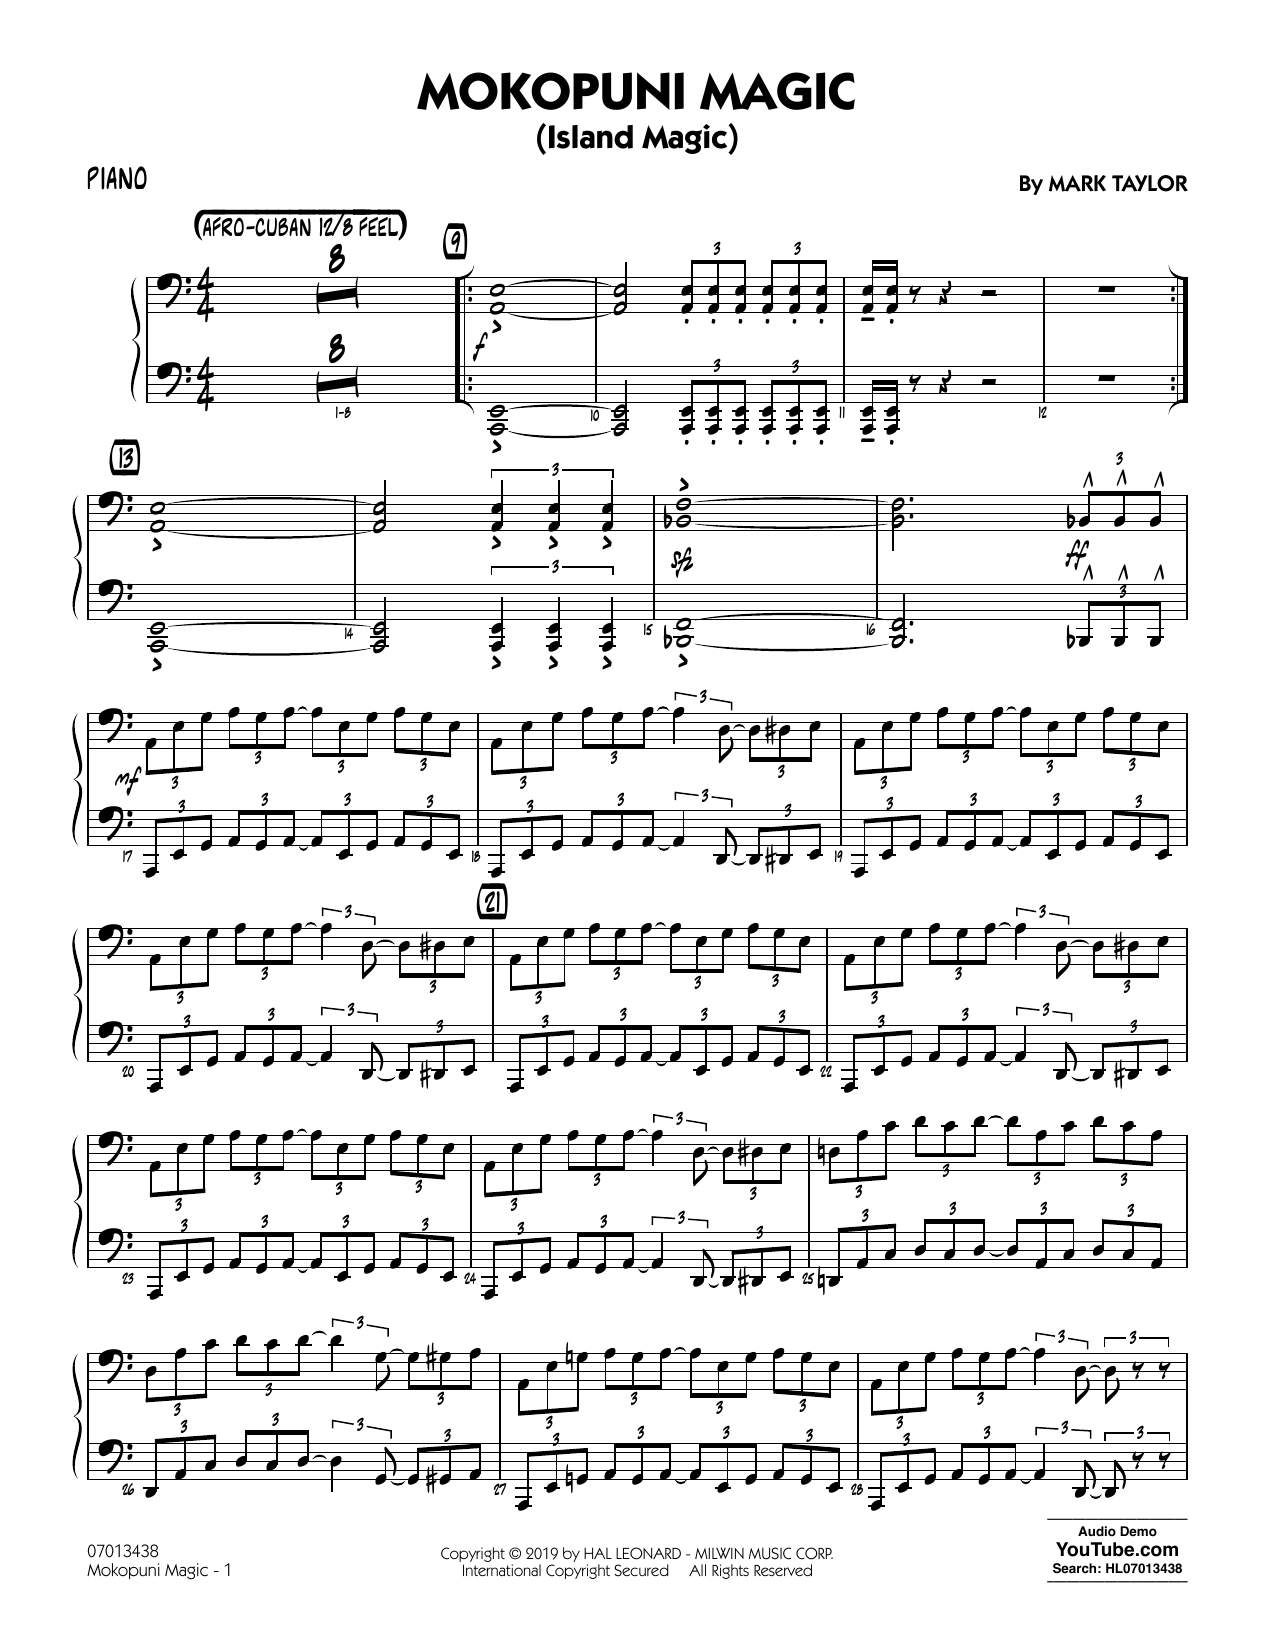 Mark Taylor Mokopuni Magic (Island Magic) - Piano Sheet Music Notes & Chords for Jazz Ensemble - Download or Print PDF